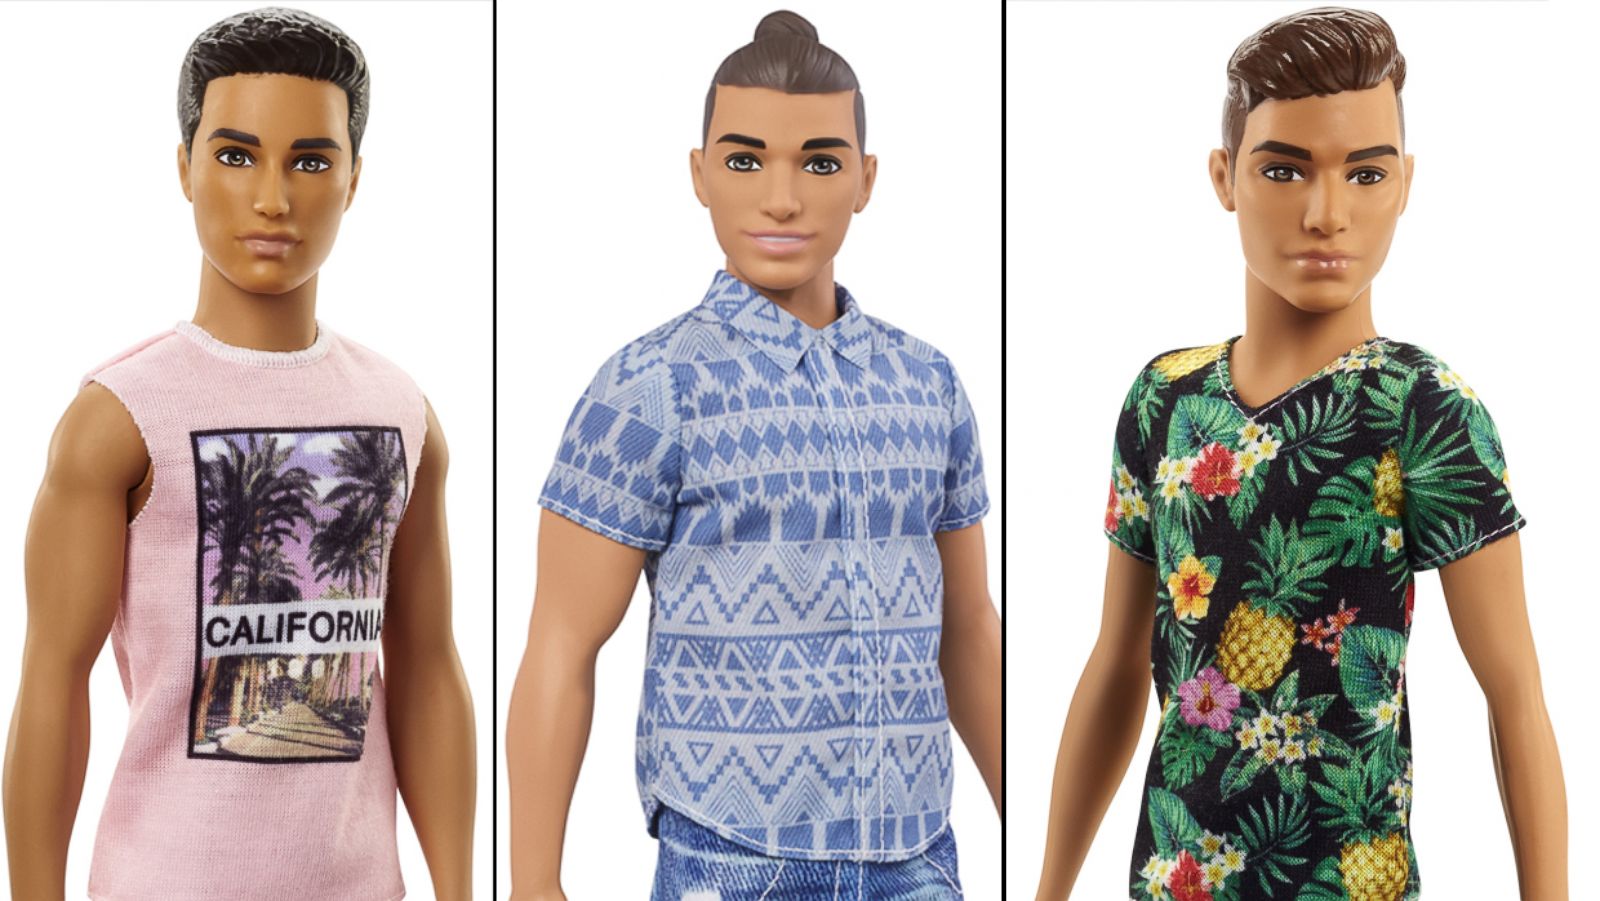 Mattel unveils diverse line of Ken 